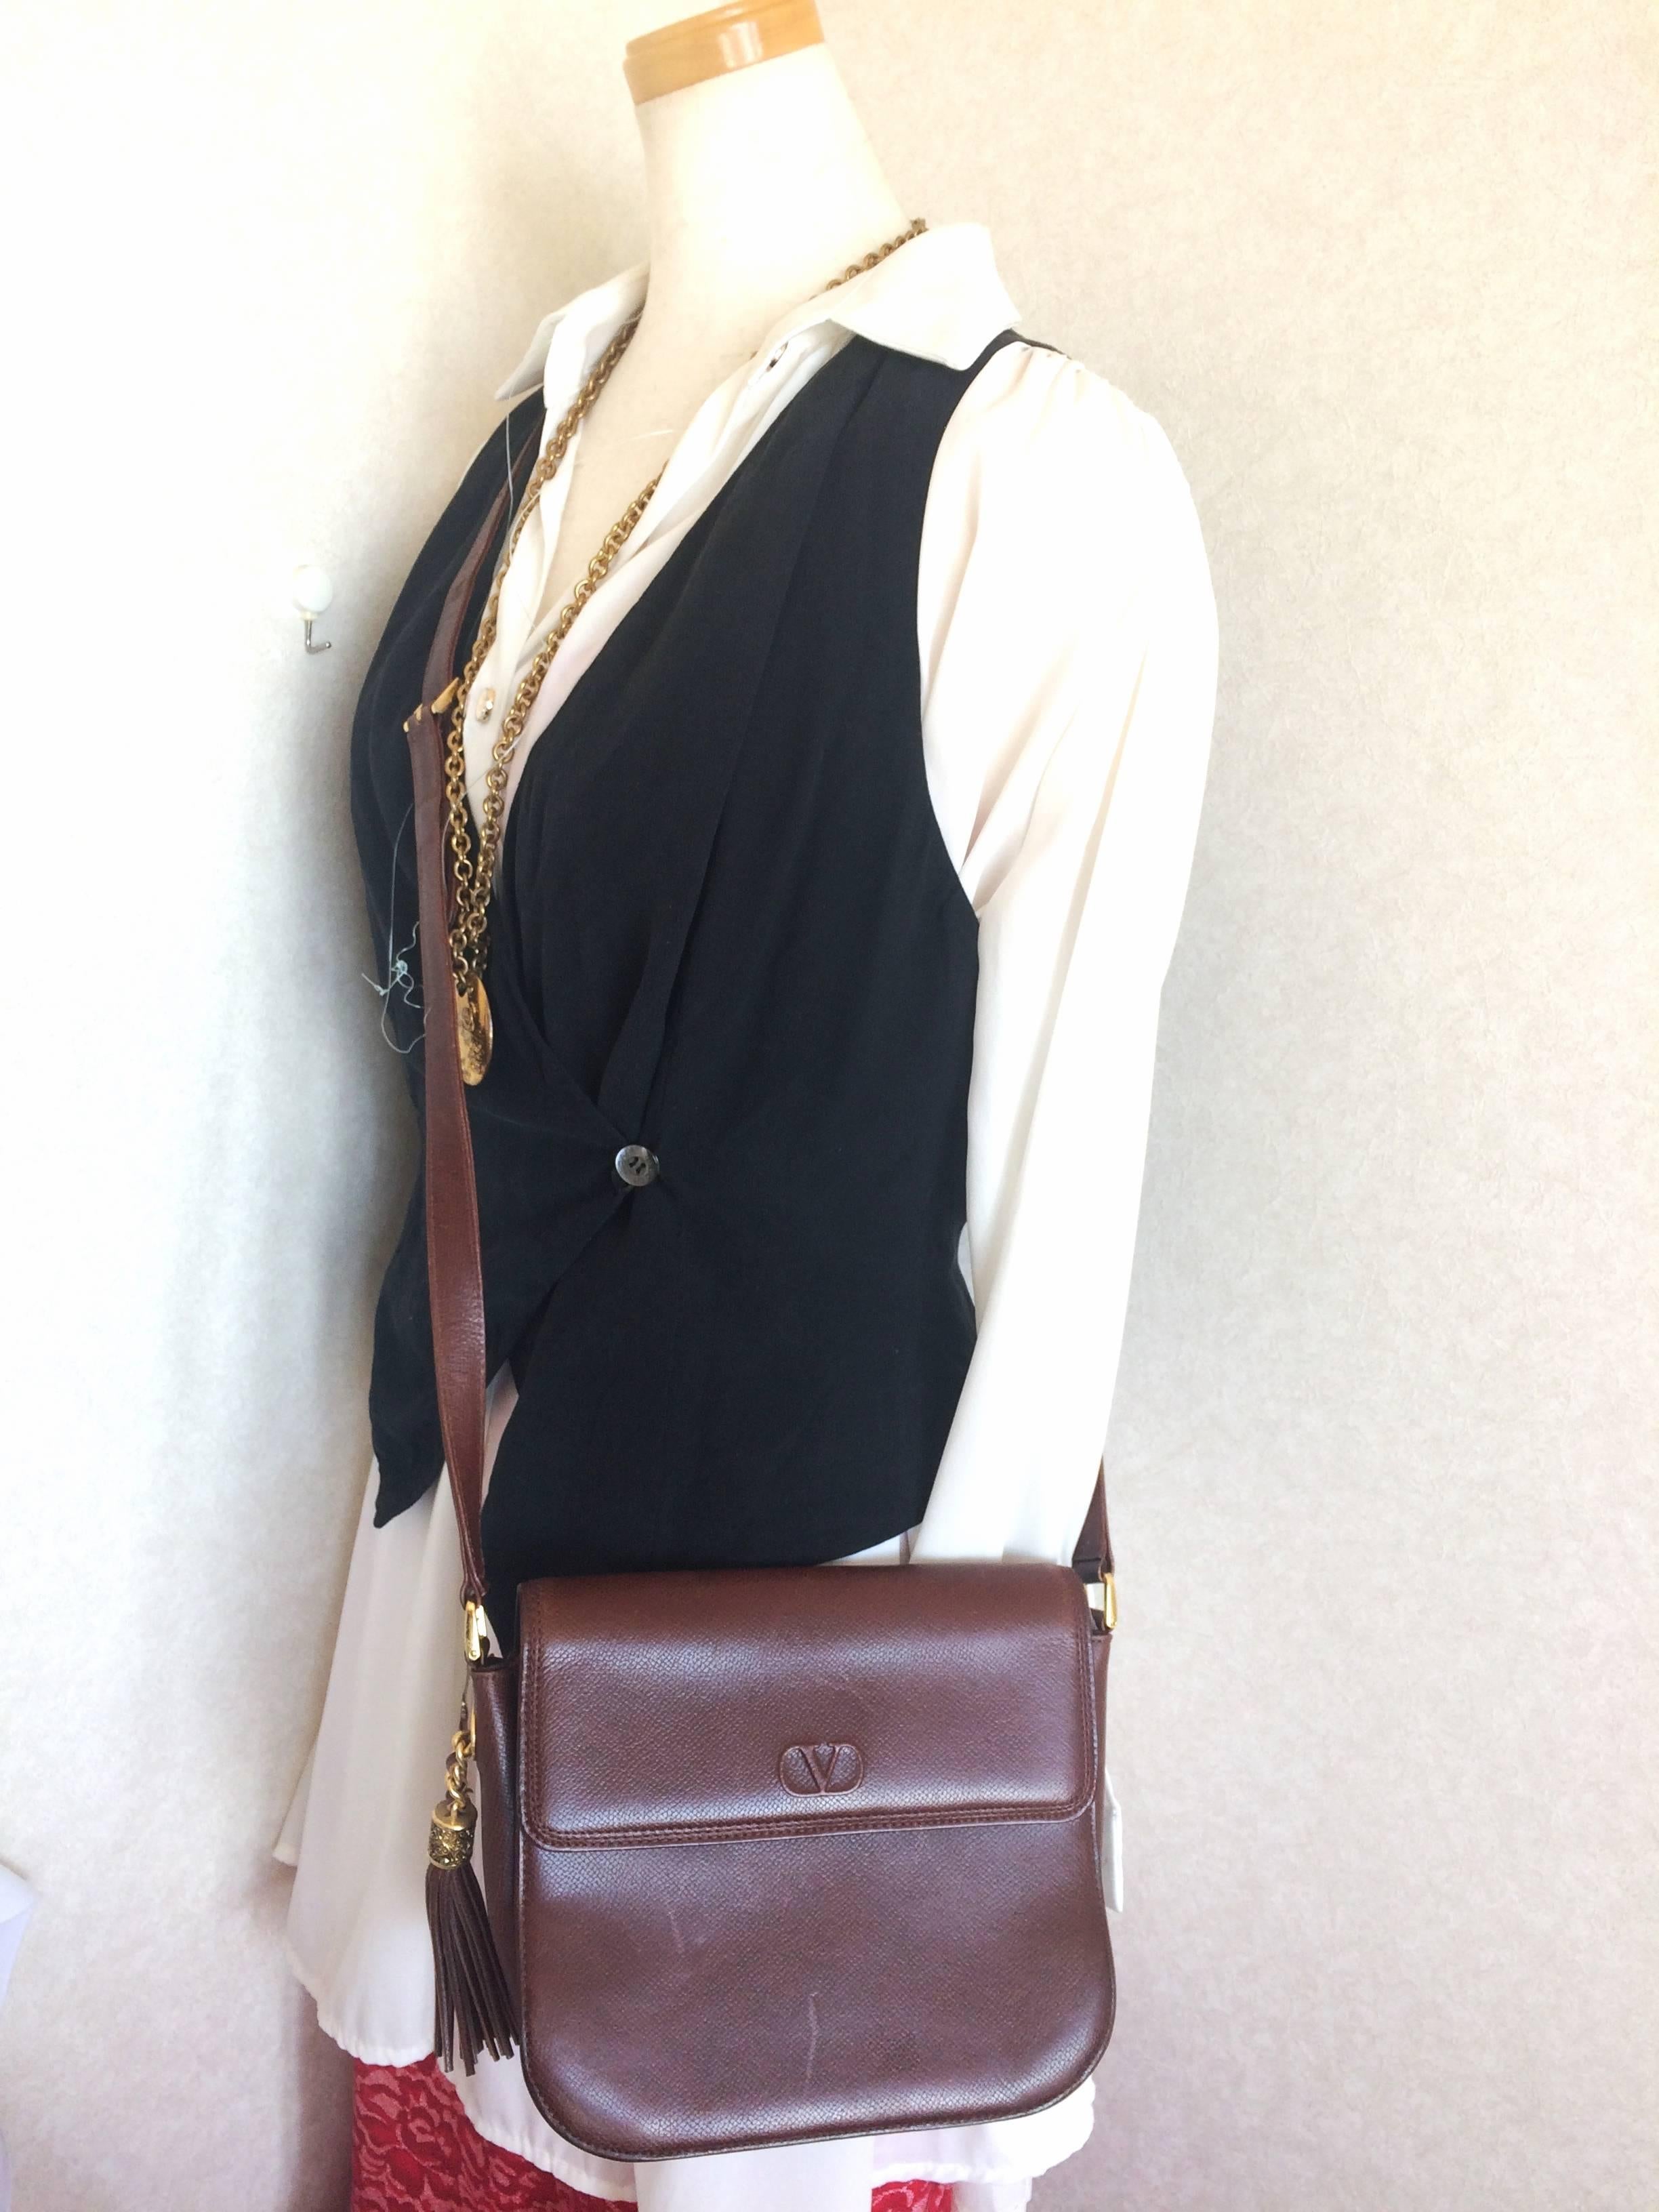 Vintage Valentino Garavani dark brown leather shoulder bag with tassel charm. 3